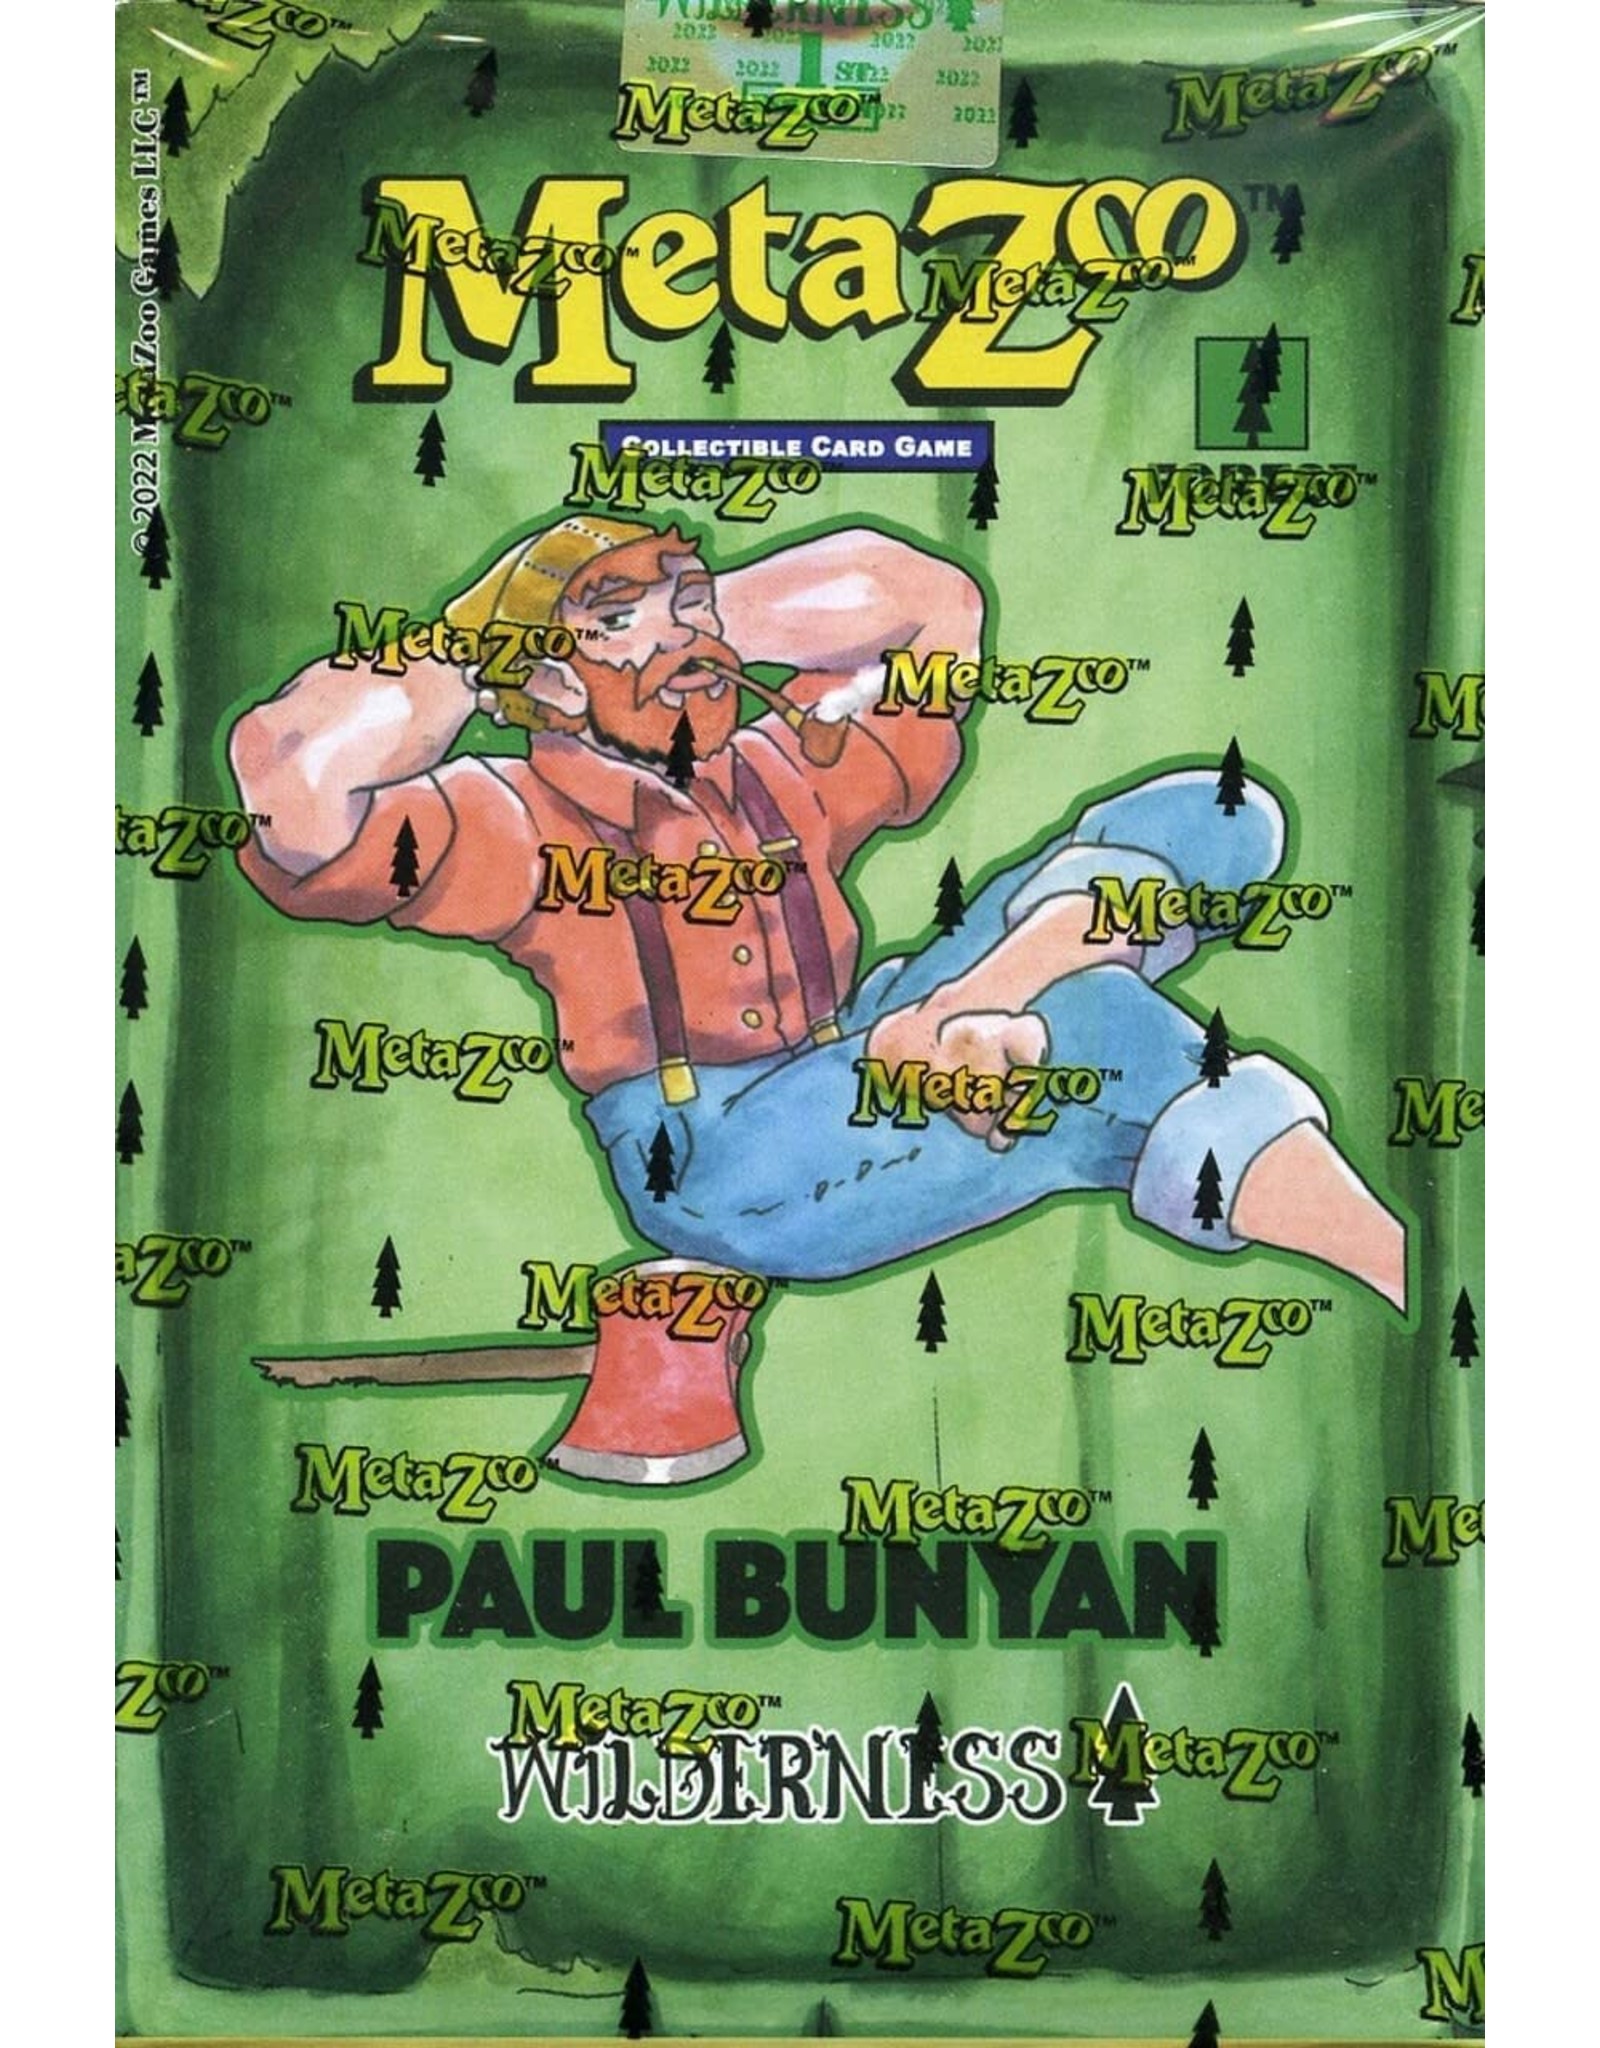 MetaZoo Wilderness Theme Deck - Paul Bunyan